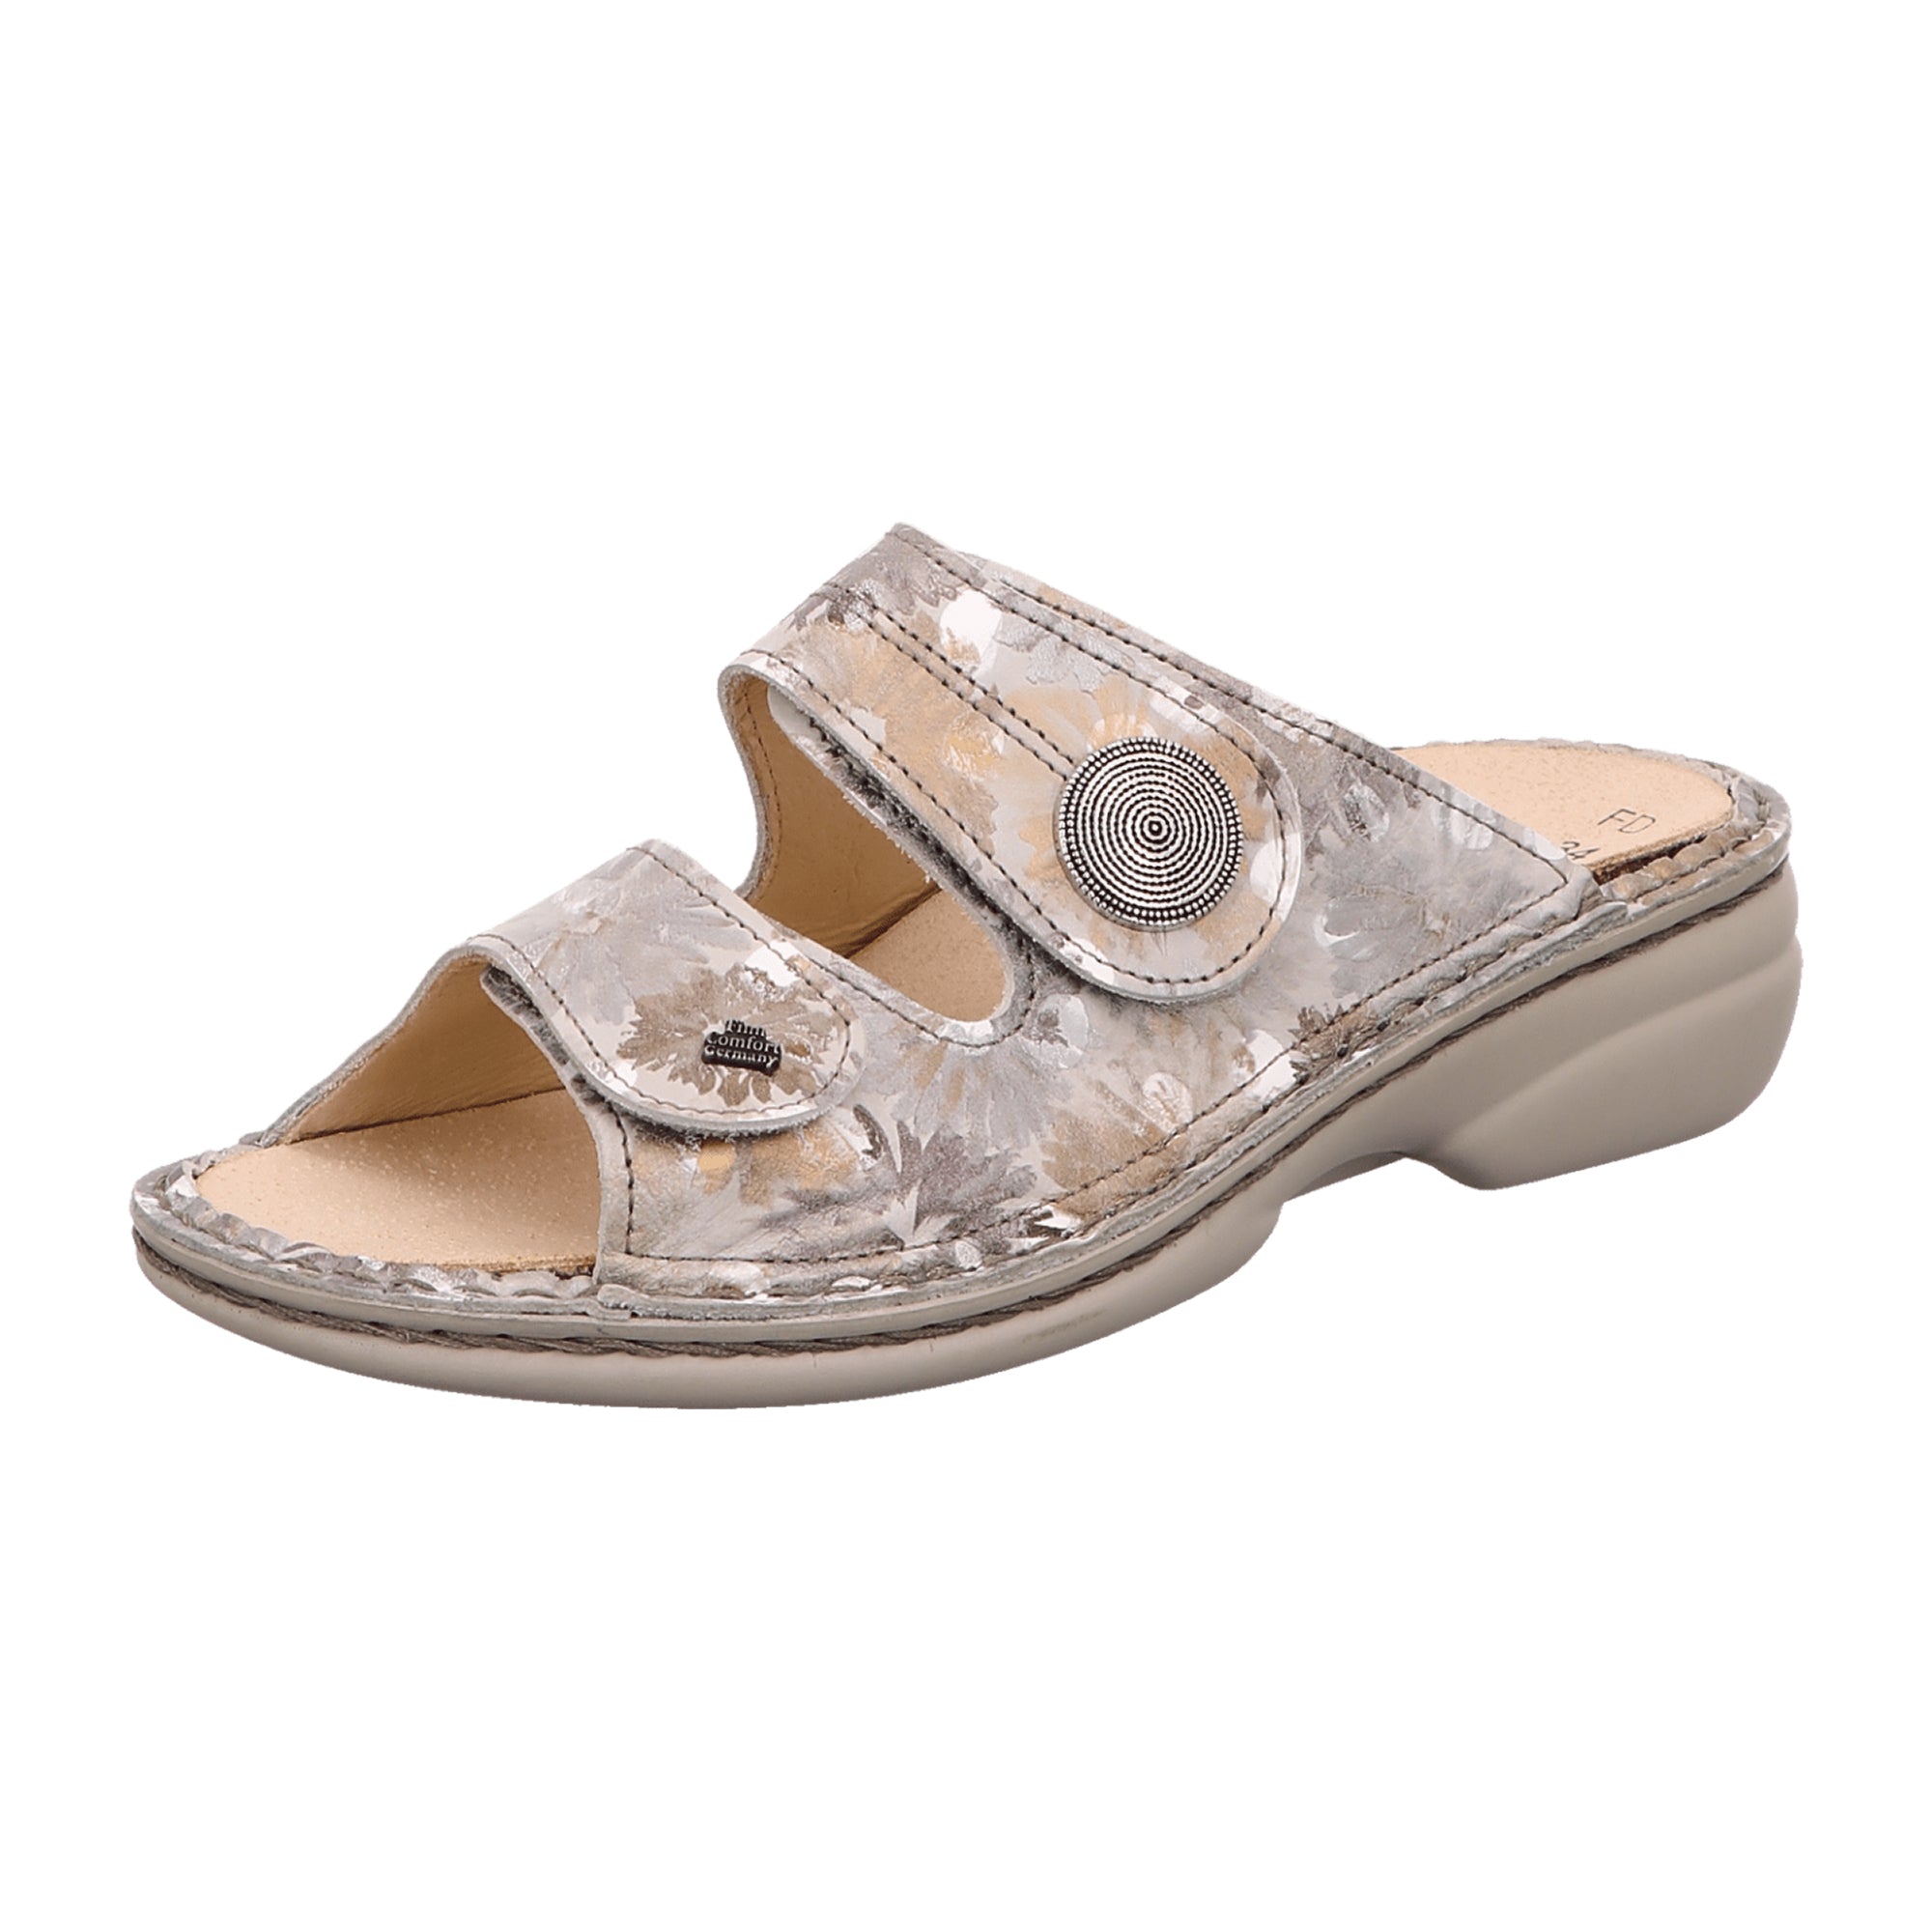 Finn Comfort Sansibar Beige Sandals - Stylish & Comfortable Footwear for Women